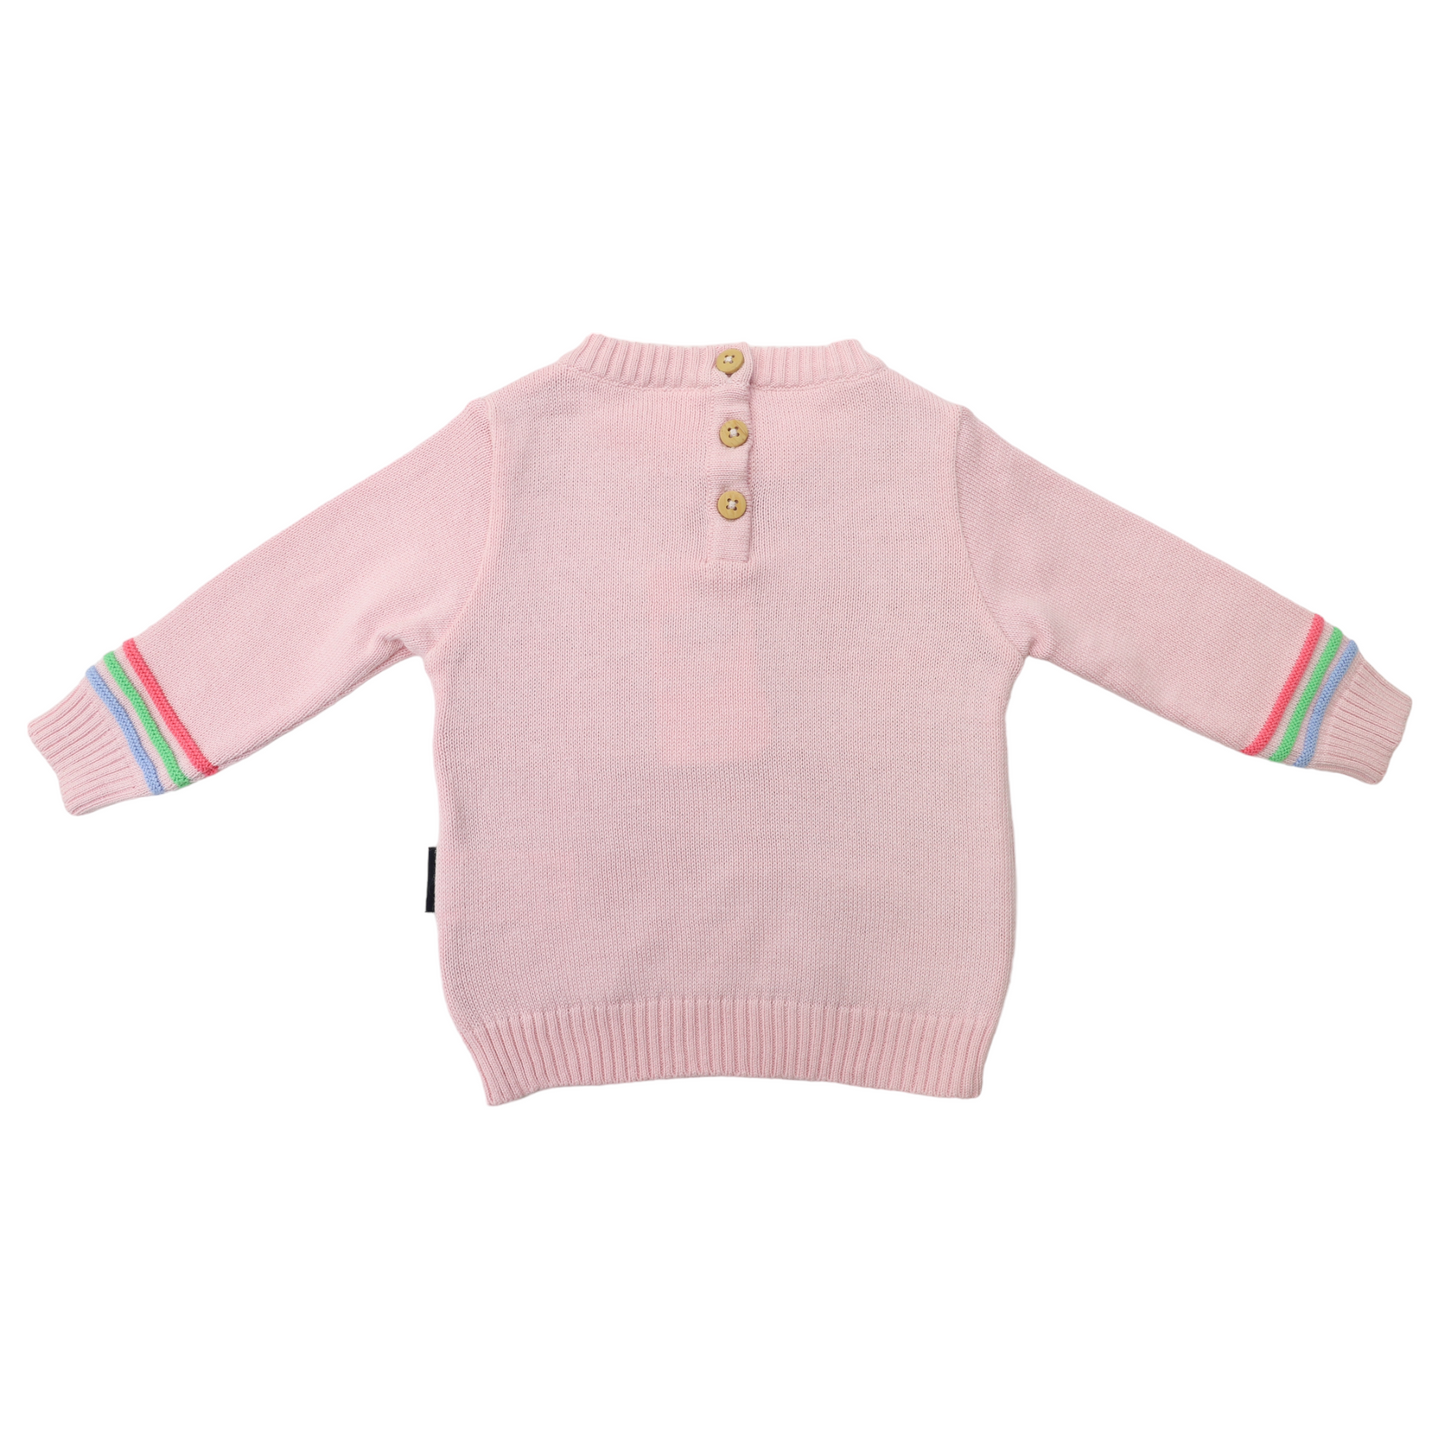 Rainbow Pattern Knit Sweater Fairytale Pink